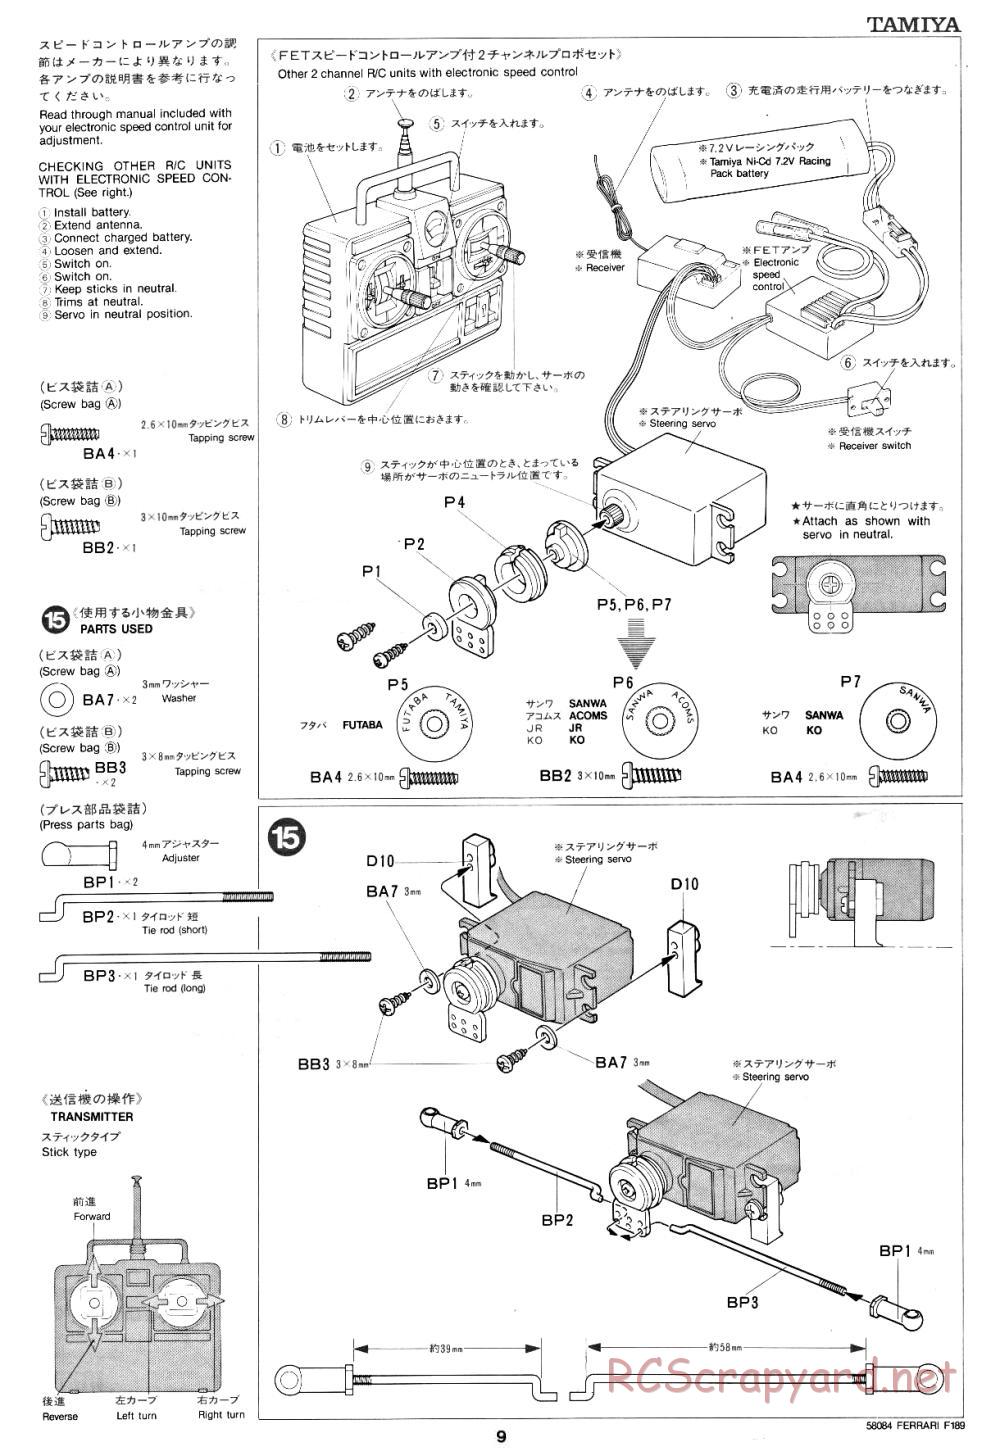 Tamiya - Ferrari F189 Late Version - 58084 - Manual - Page 9